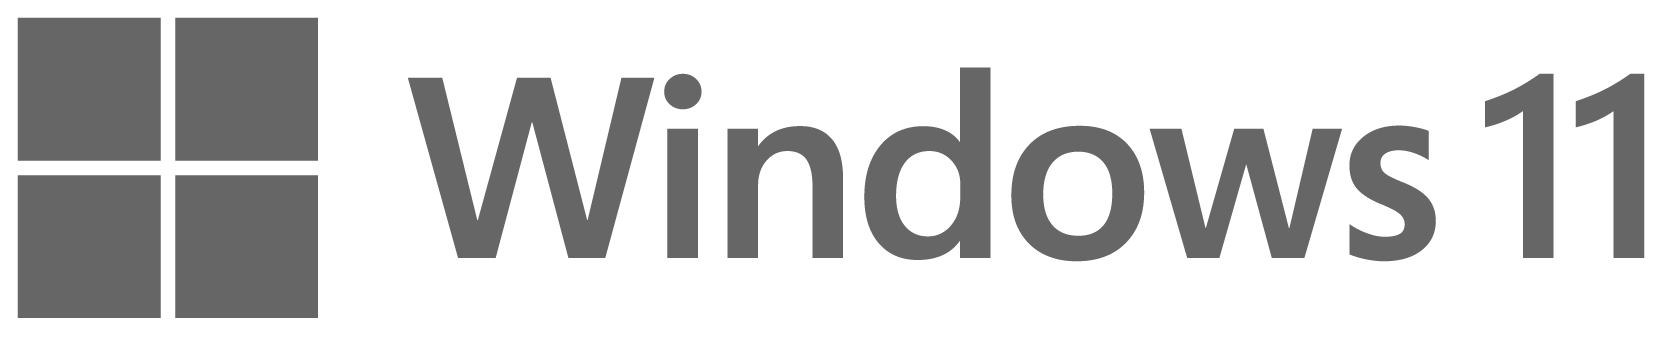 windows logo